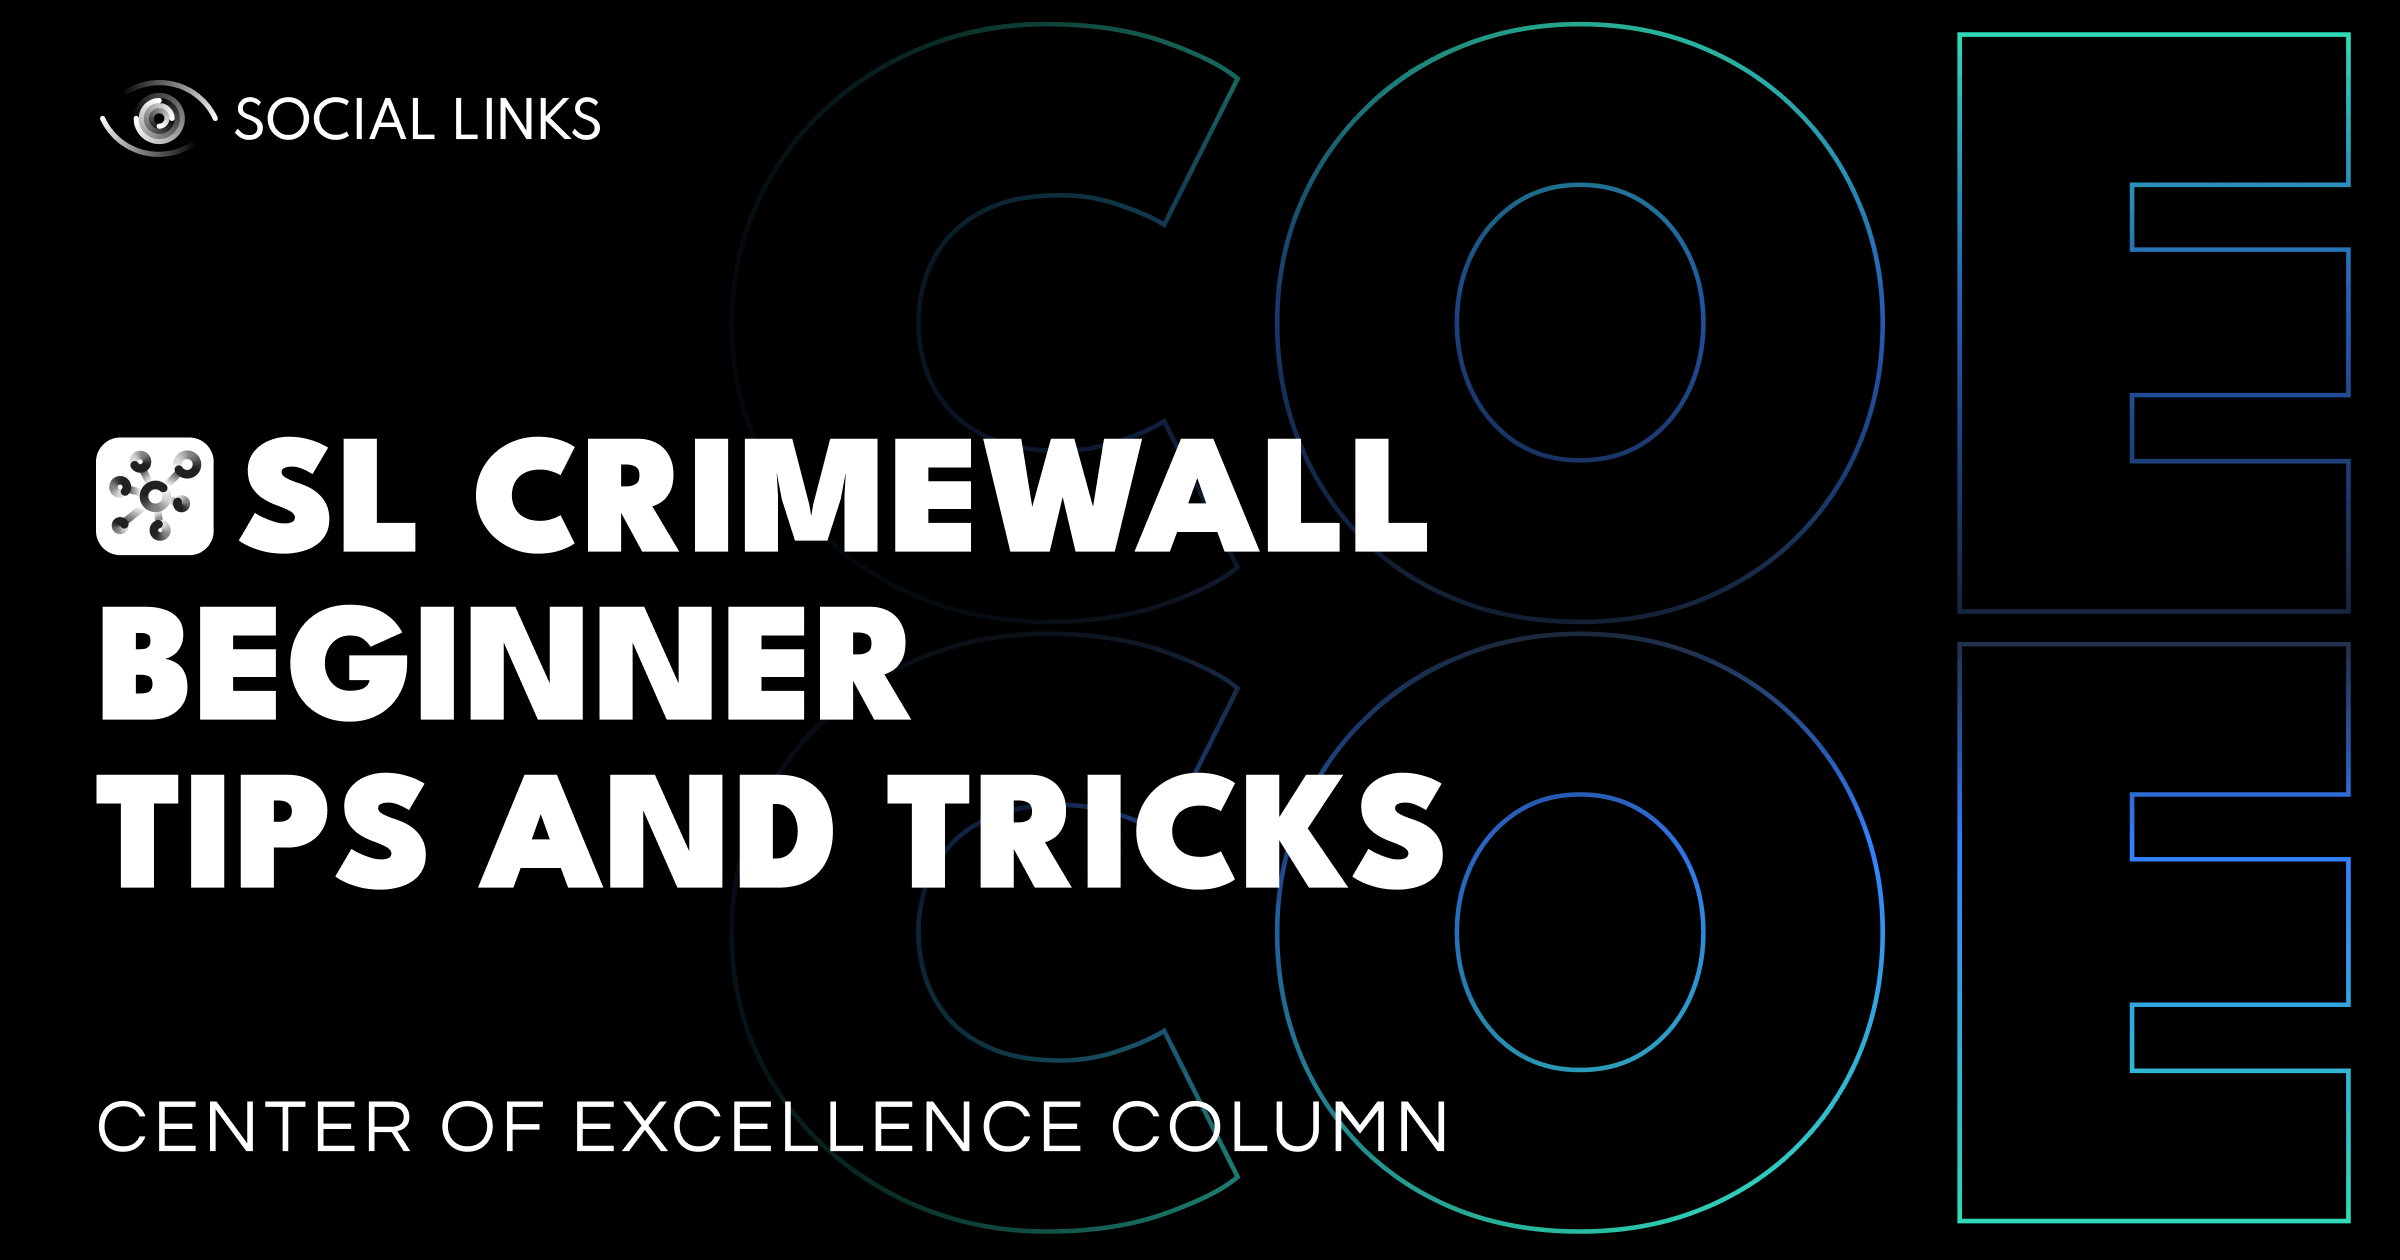 Center of Excellence Column: SL Crimewall Beginner Tips and Tricks